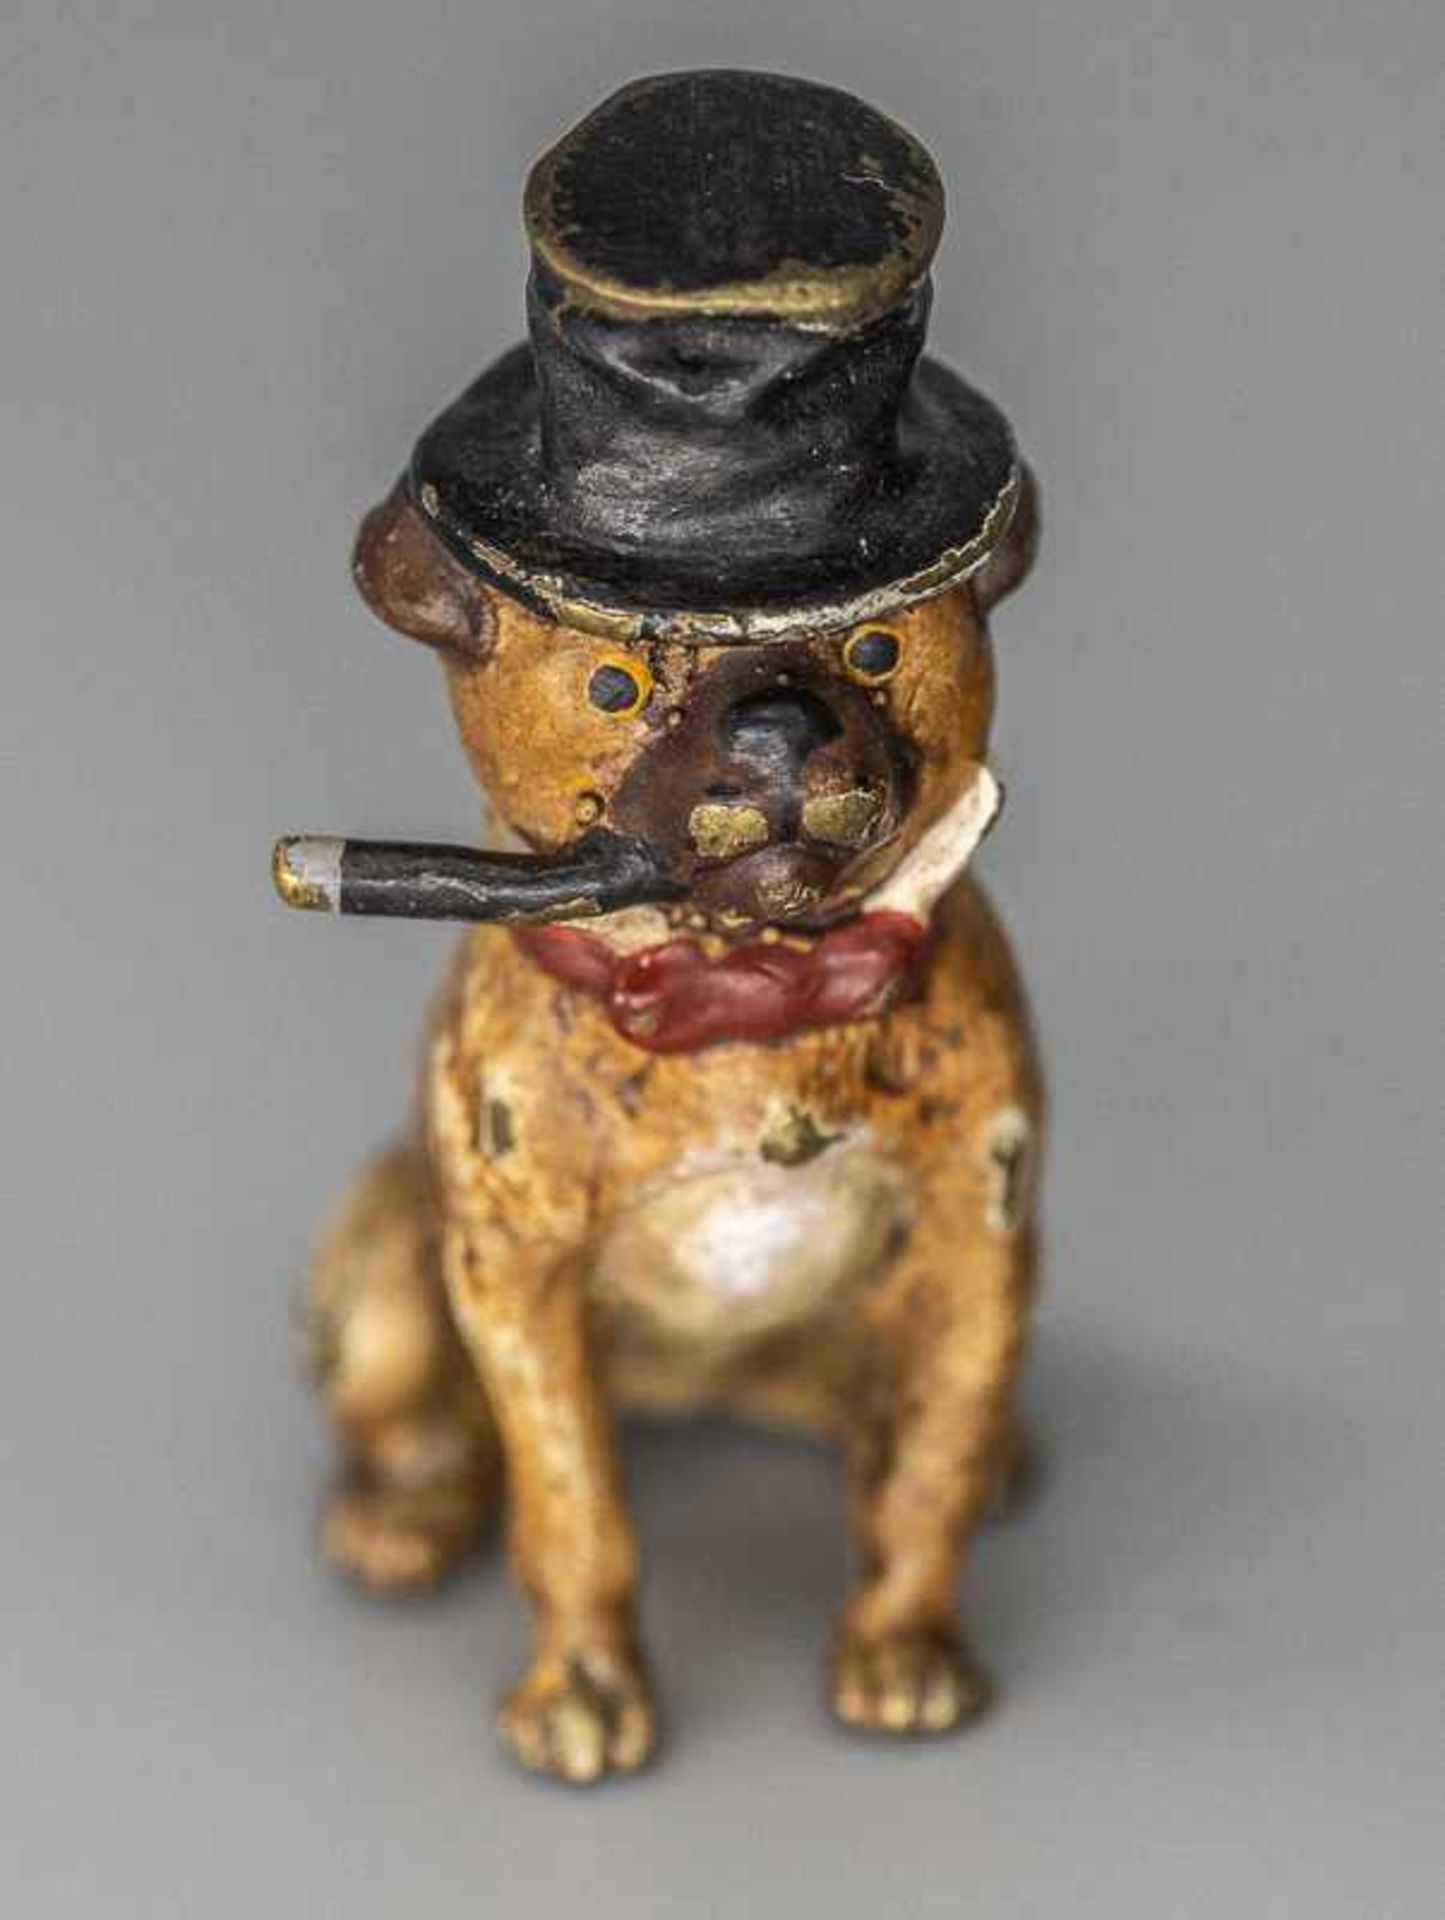 3 figürliche Wiener Bronzen "Hunde", Fritz Bergmann oder Franz Xaver Bergmann zugeschrieben, 20. Jh. - Image 2 of 3